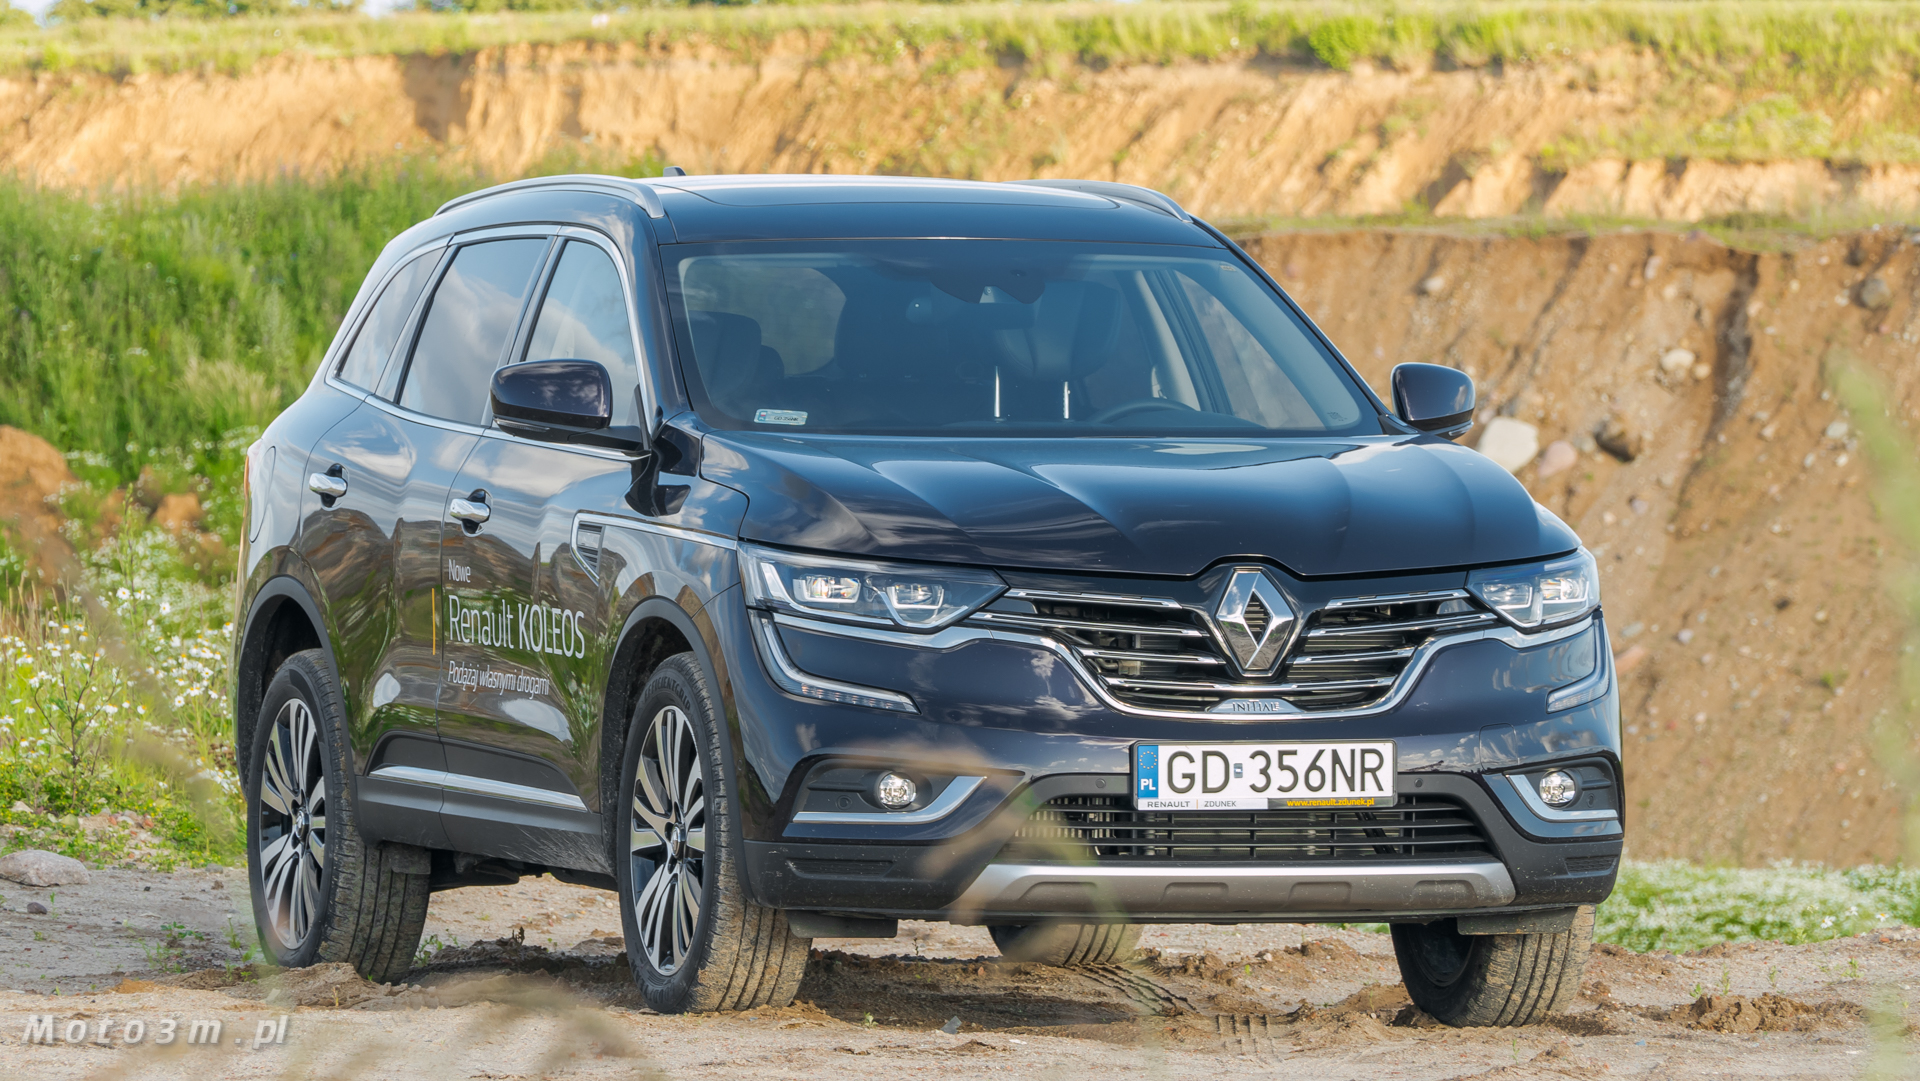 Renault Koleos 2.0 dCi powrót producenta do segmentu SUV